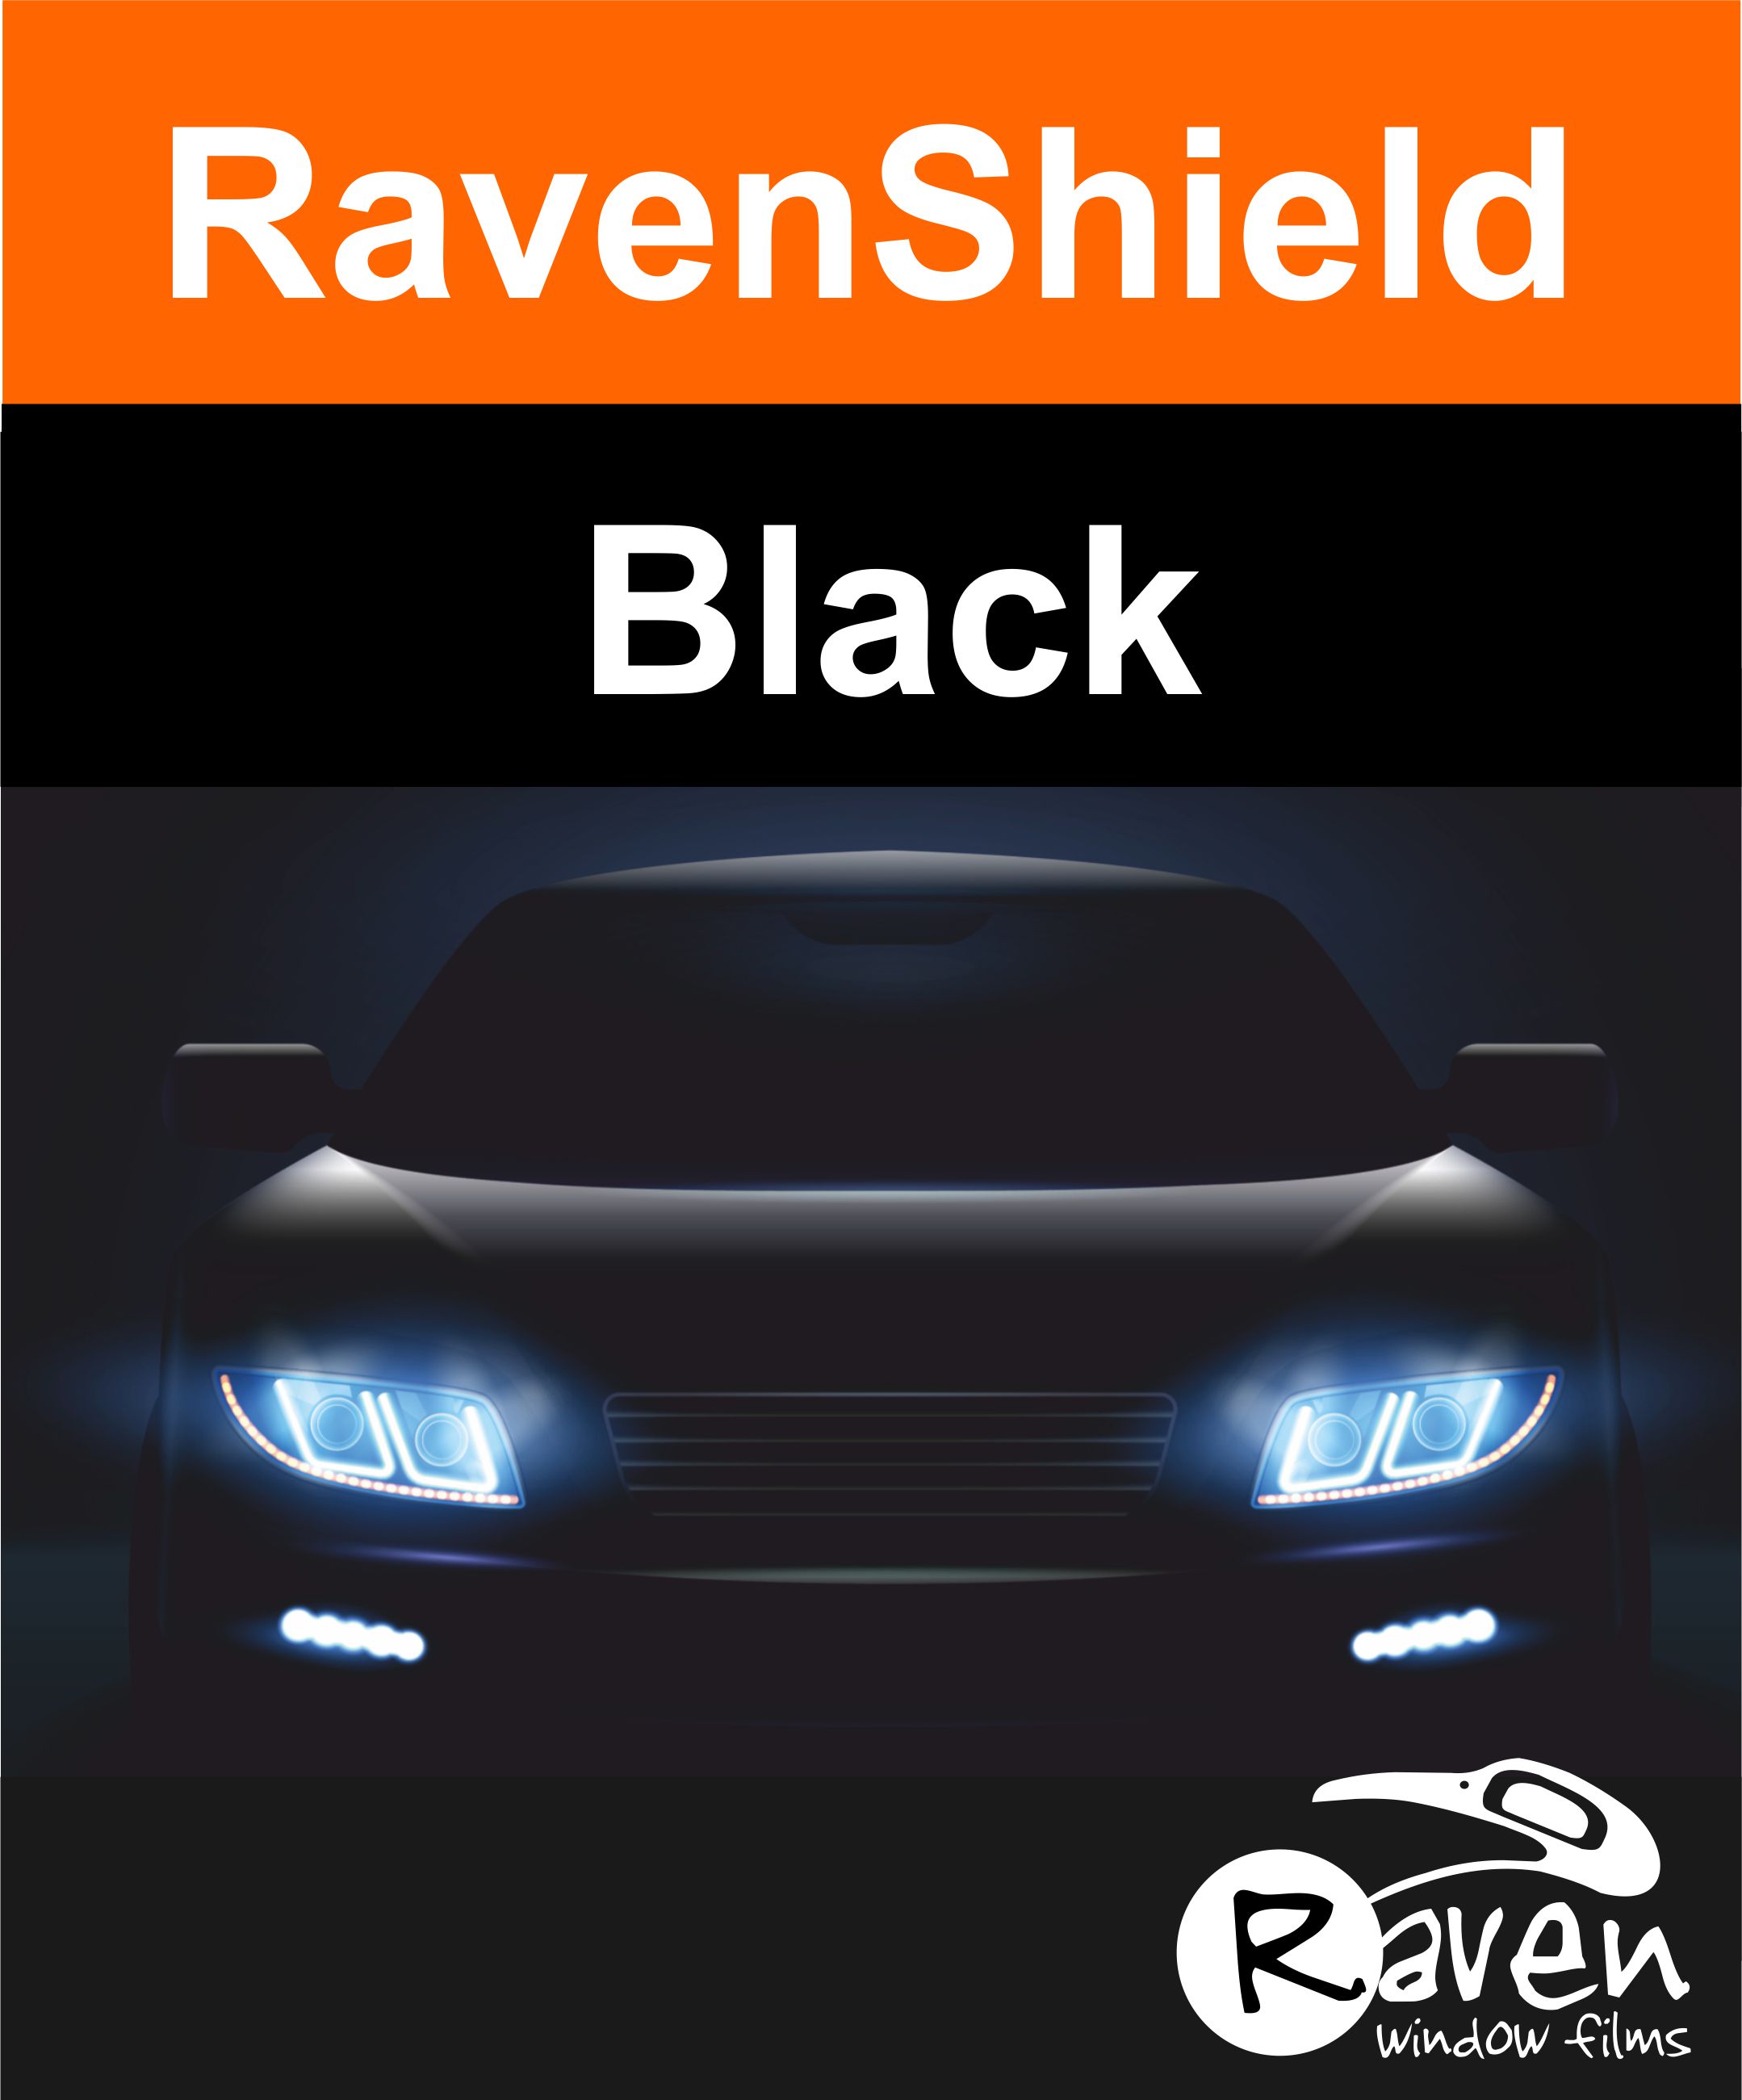 RavenShield Black